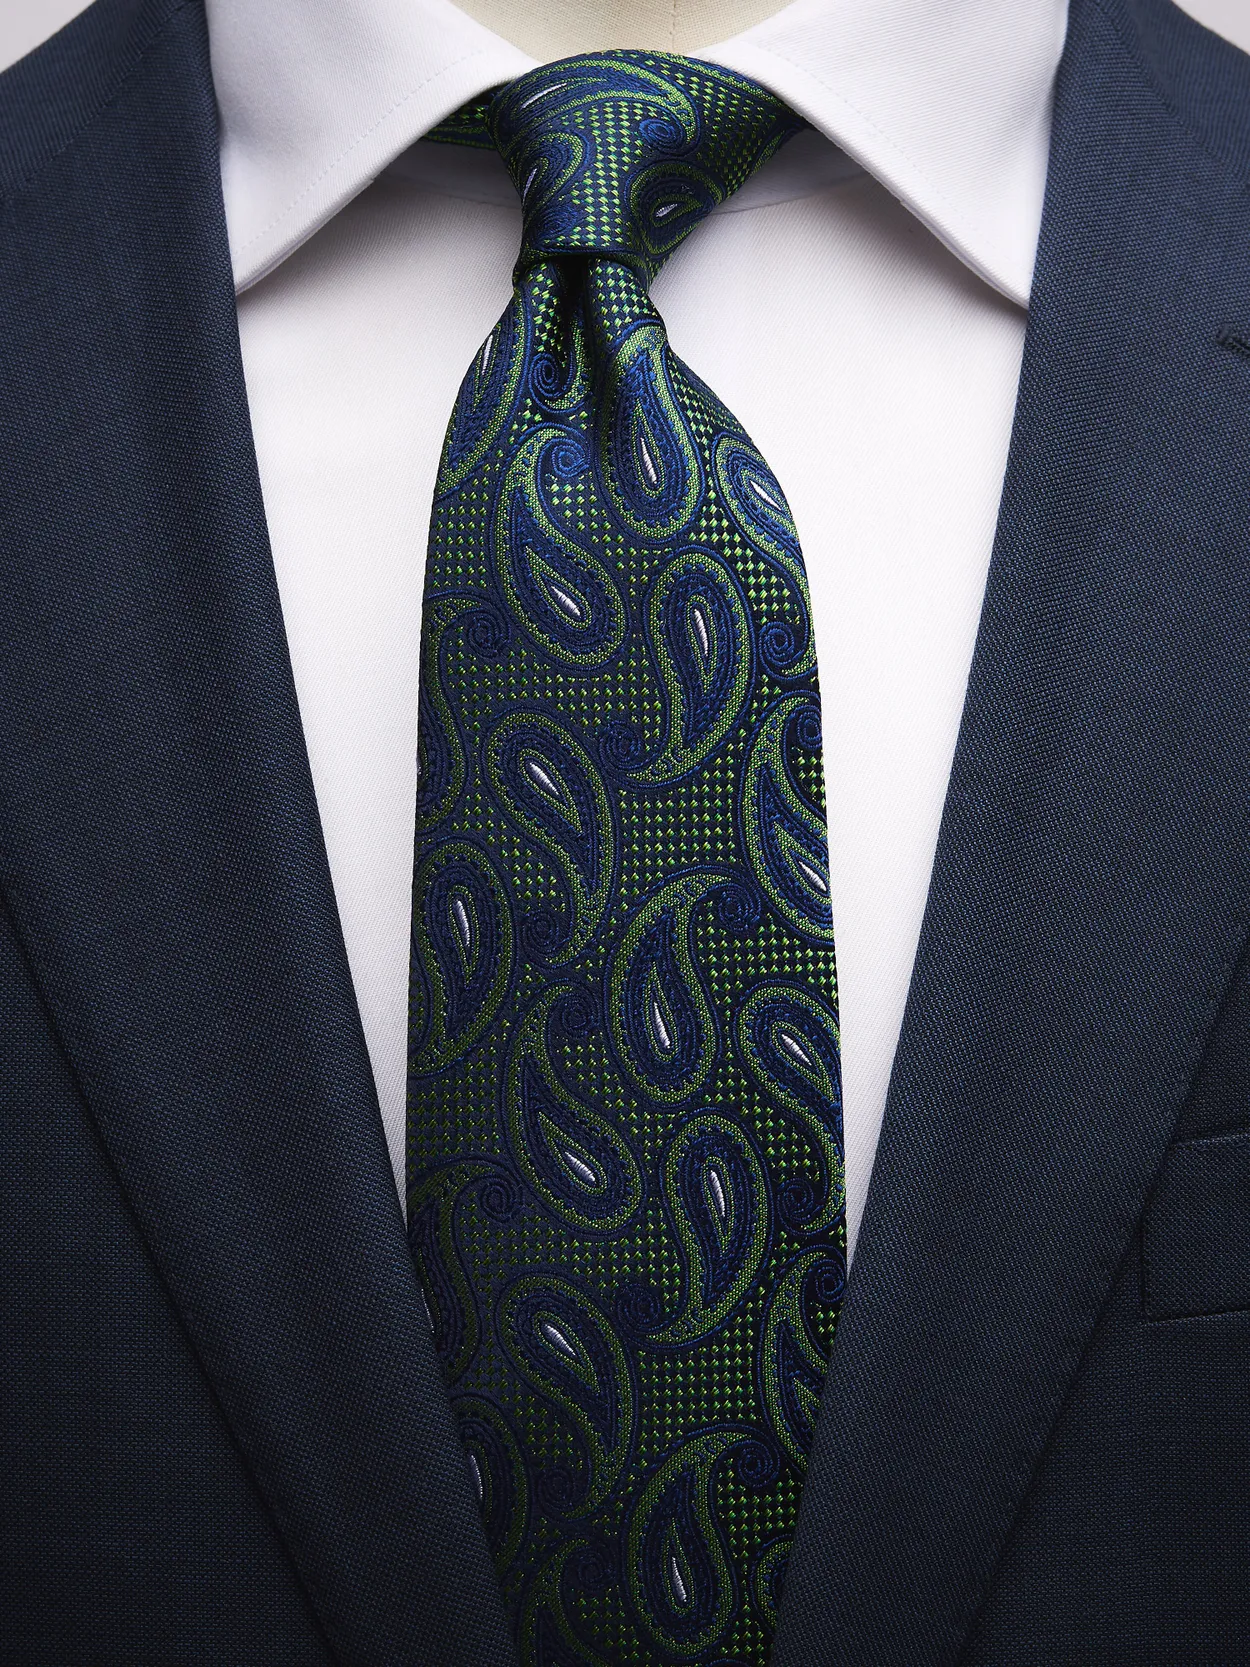 Green & Blue Tie Paisley